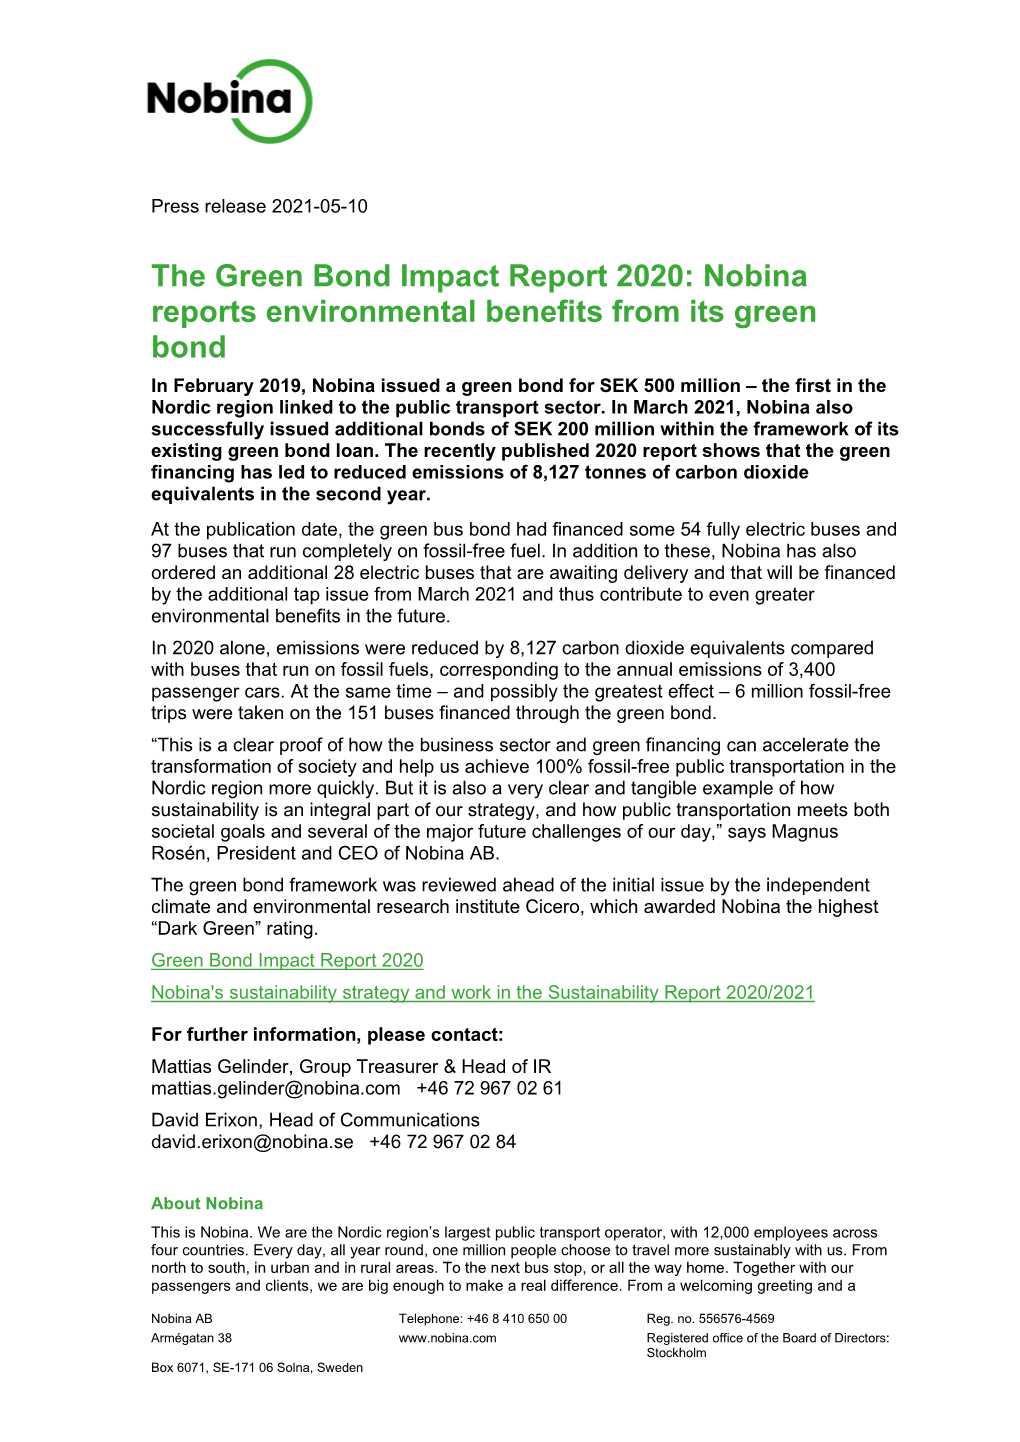 The Green Bond Impact Report 2020: Nobina Reports Environmental